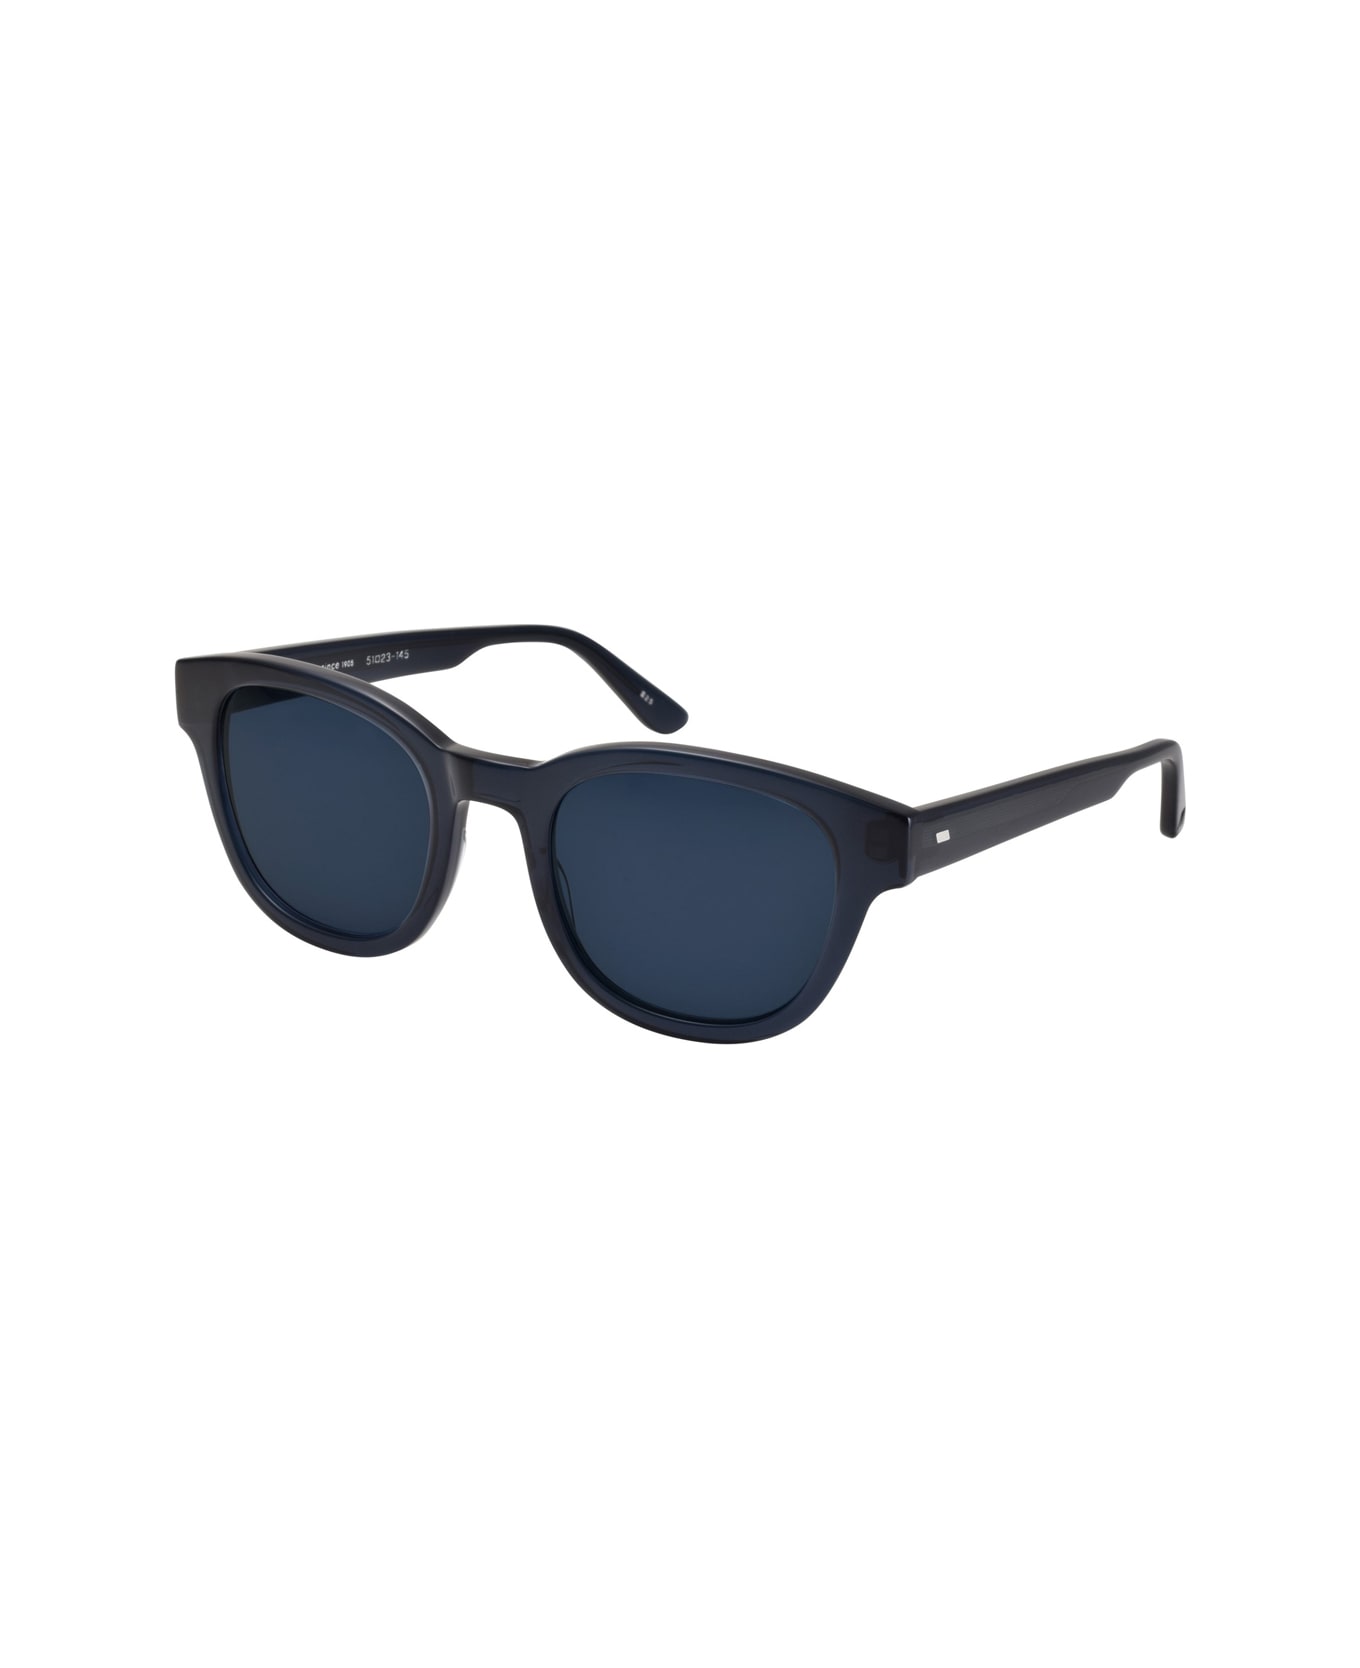 Masunaga Kk 096 S25 Sunglasses BB0160S - Blu